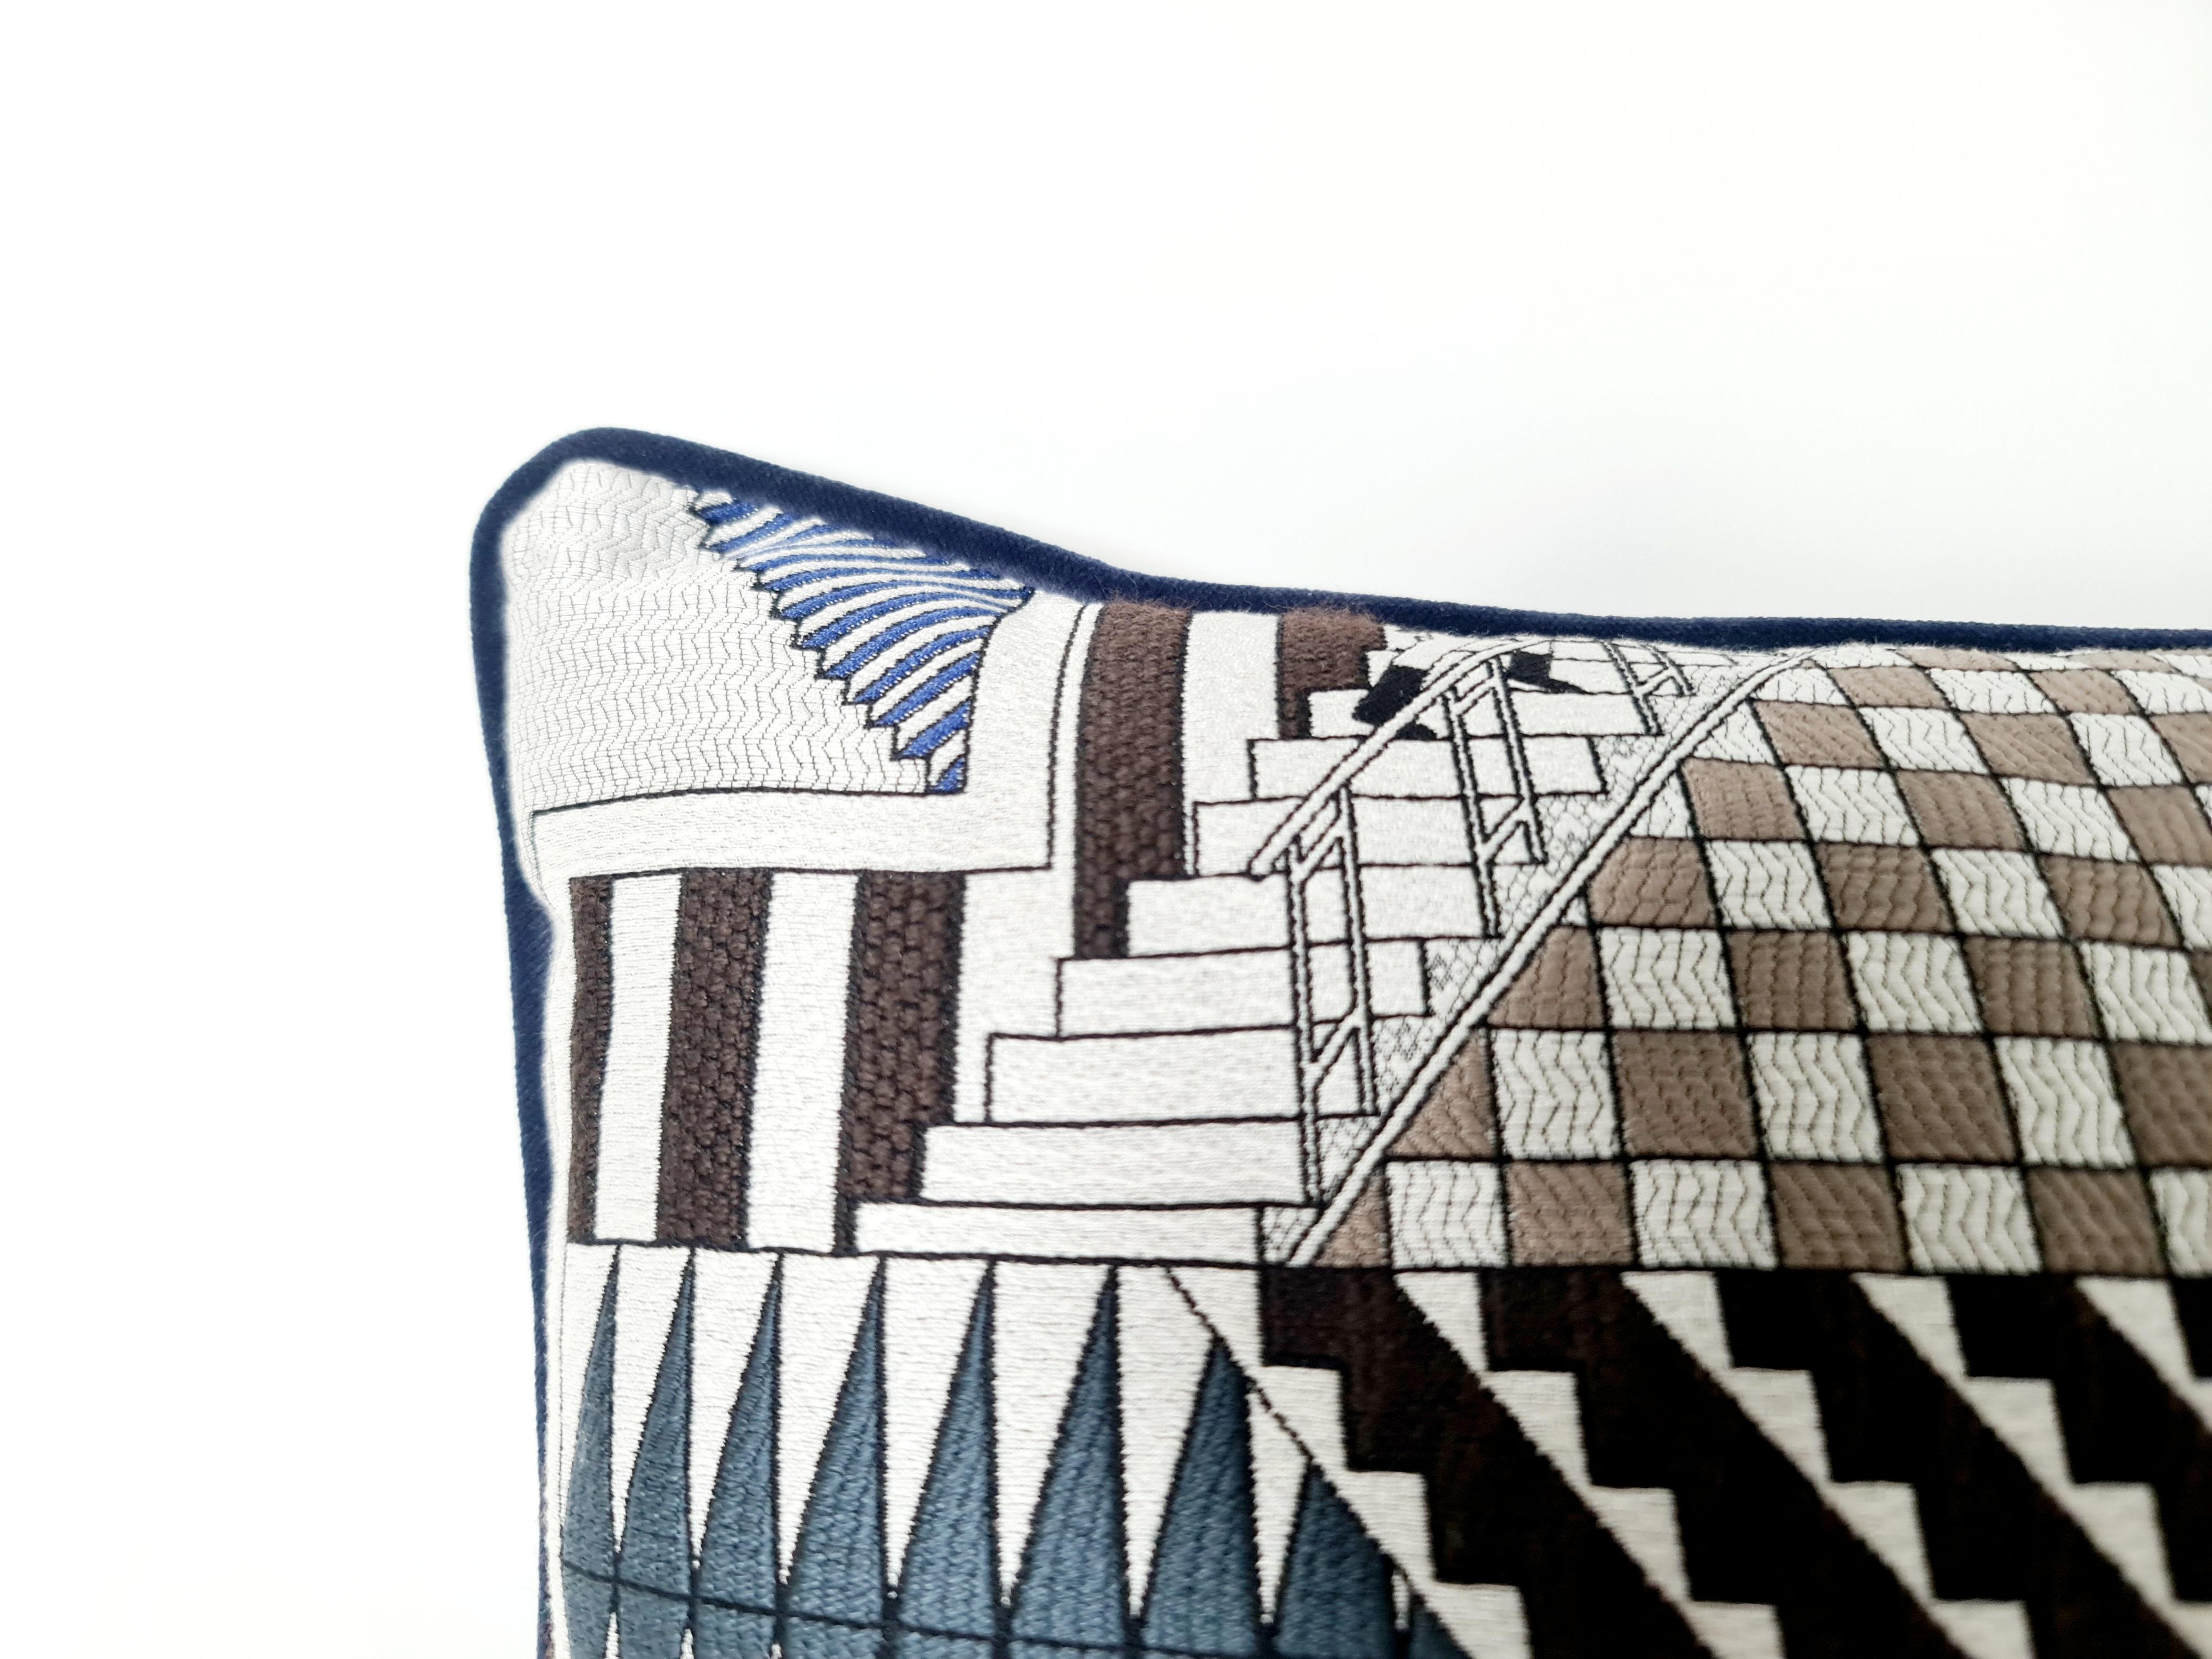 Handmade Hermès Pillow In New Condition In amstelveen, NL